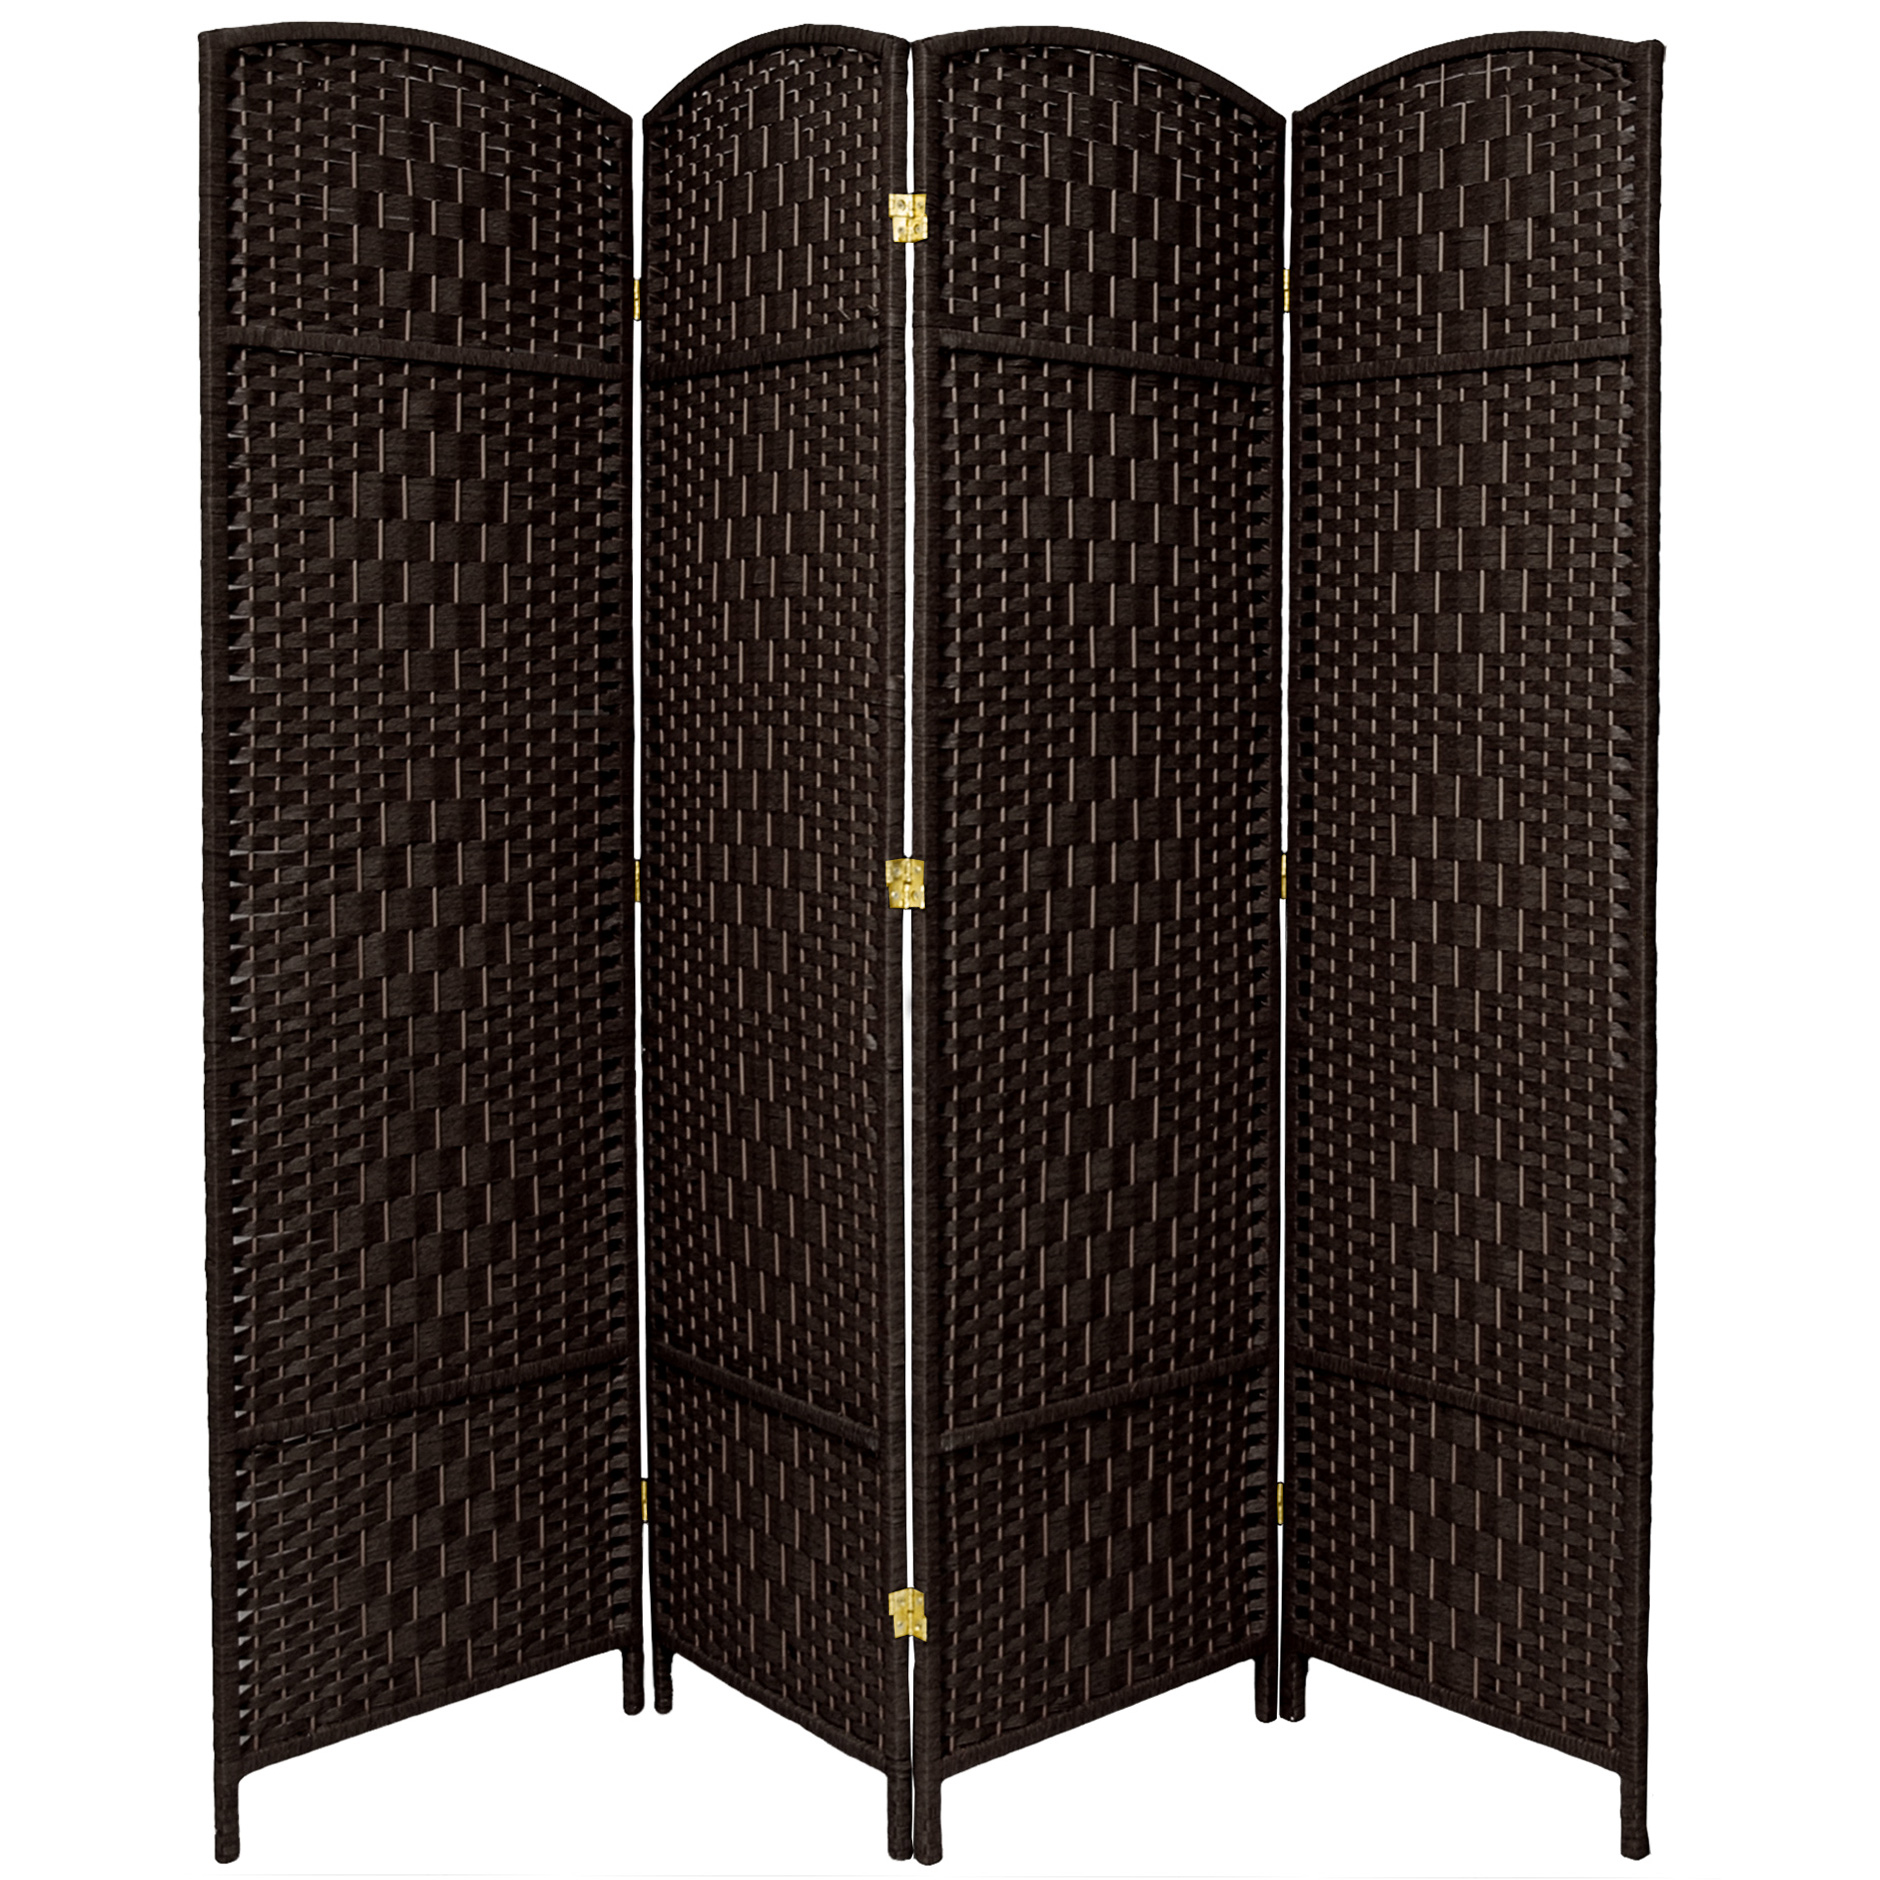 Oriental Furniture 6 ft. Tall Diamond Weave Room Divider - Black - 4 Panel - image 1 of 2